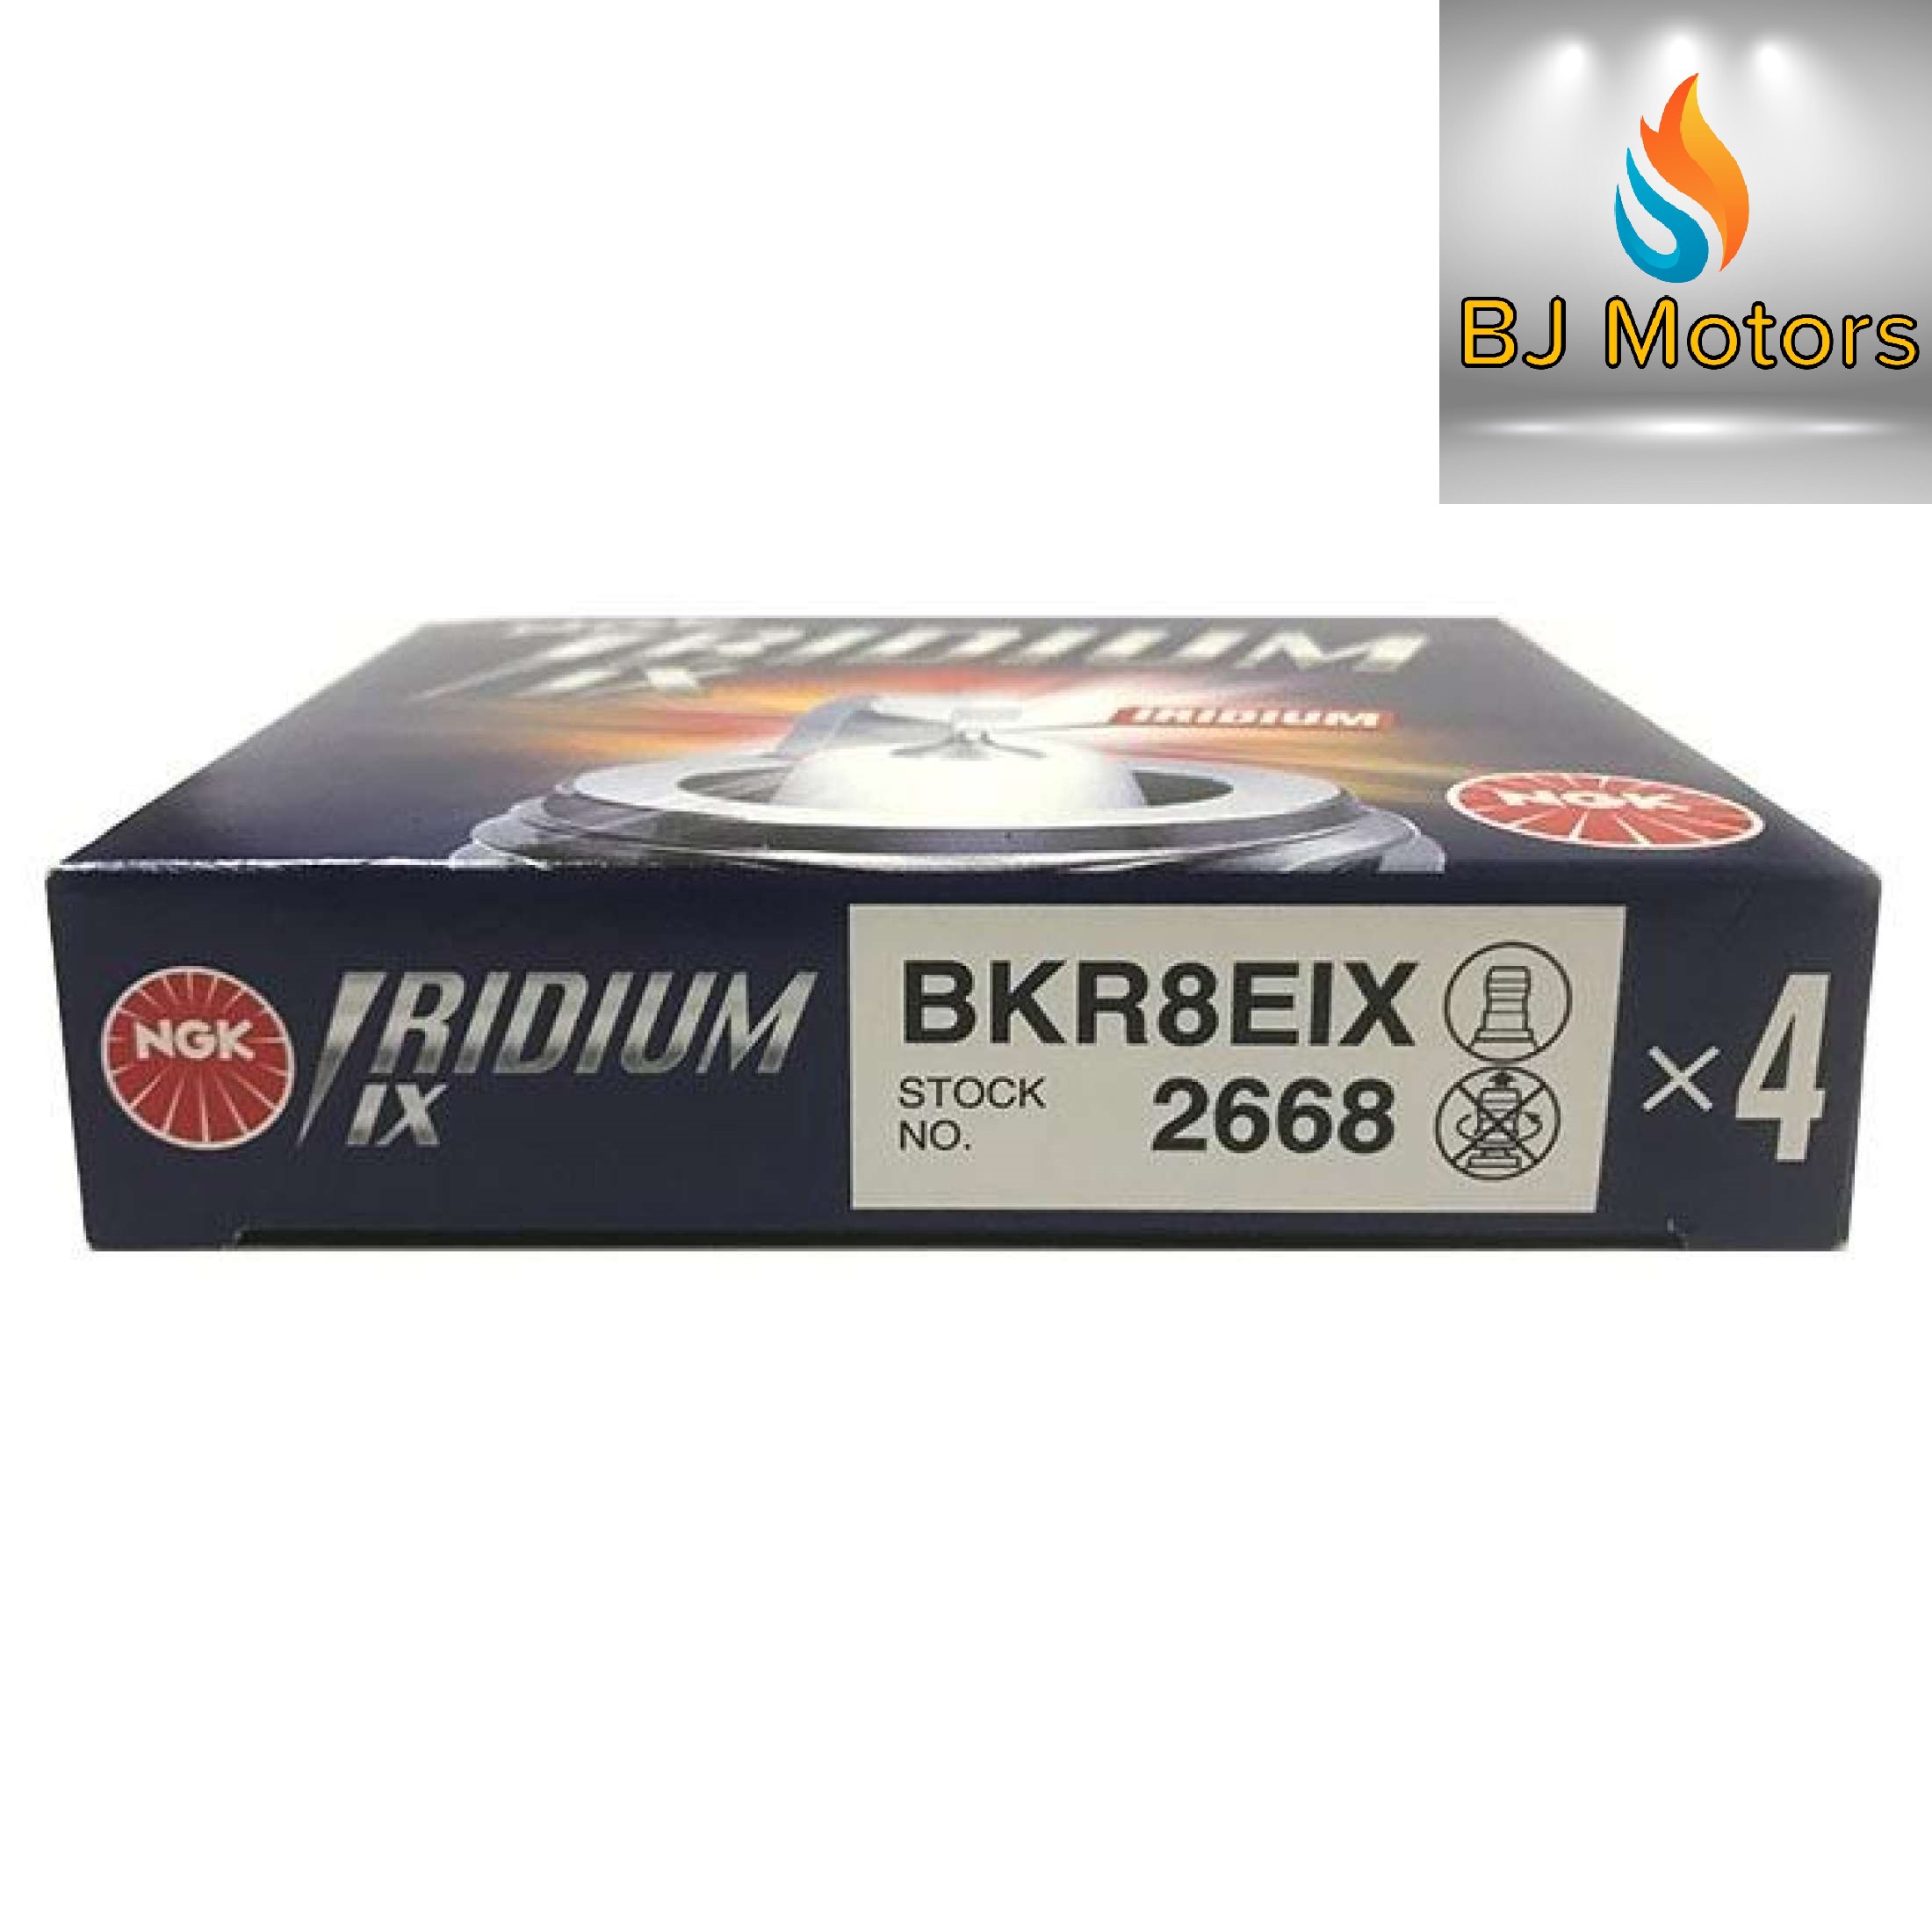 NGK หัวเทียน Iridium BKR8EIX 4 หัว หัวเทียนตัวท๊อปของ NGK  สามารถใช้แทนเบอร์ 5EGP หรือ 6EGP ใช้บล็อกขันเบอร์16